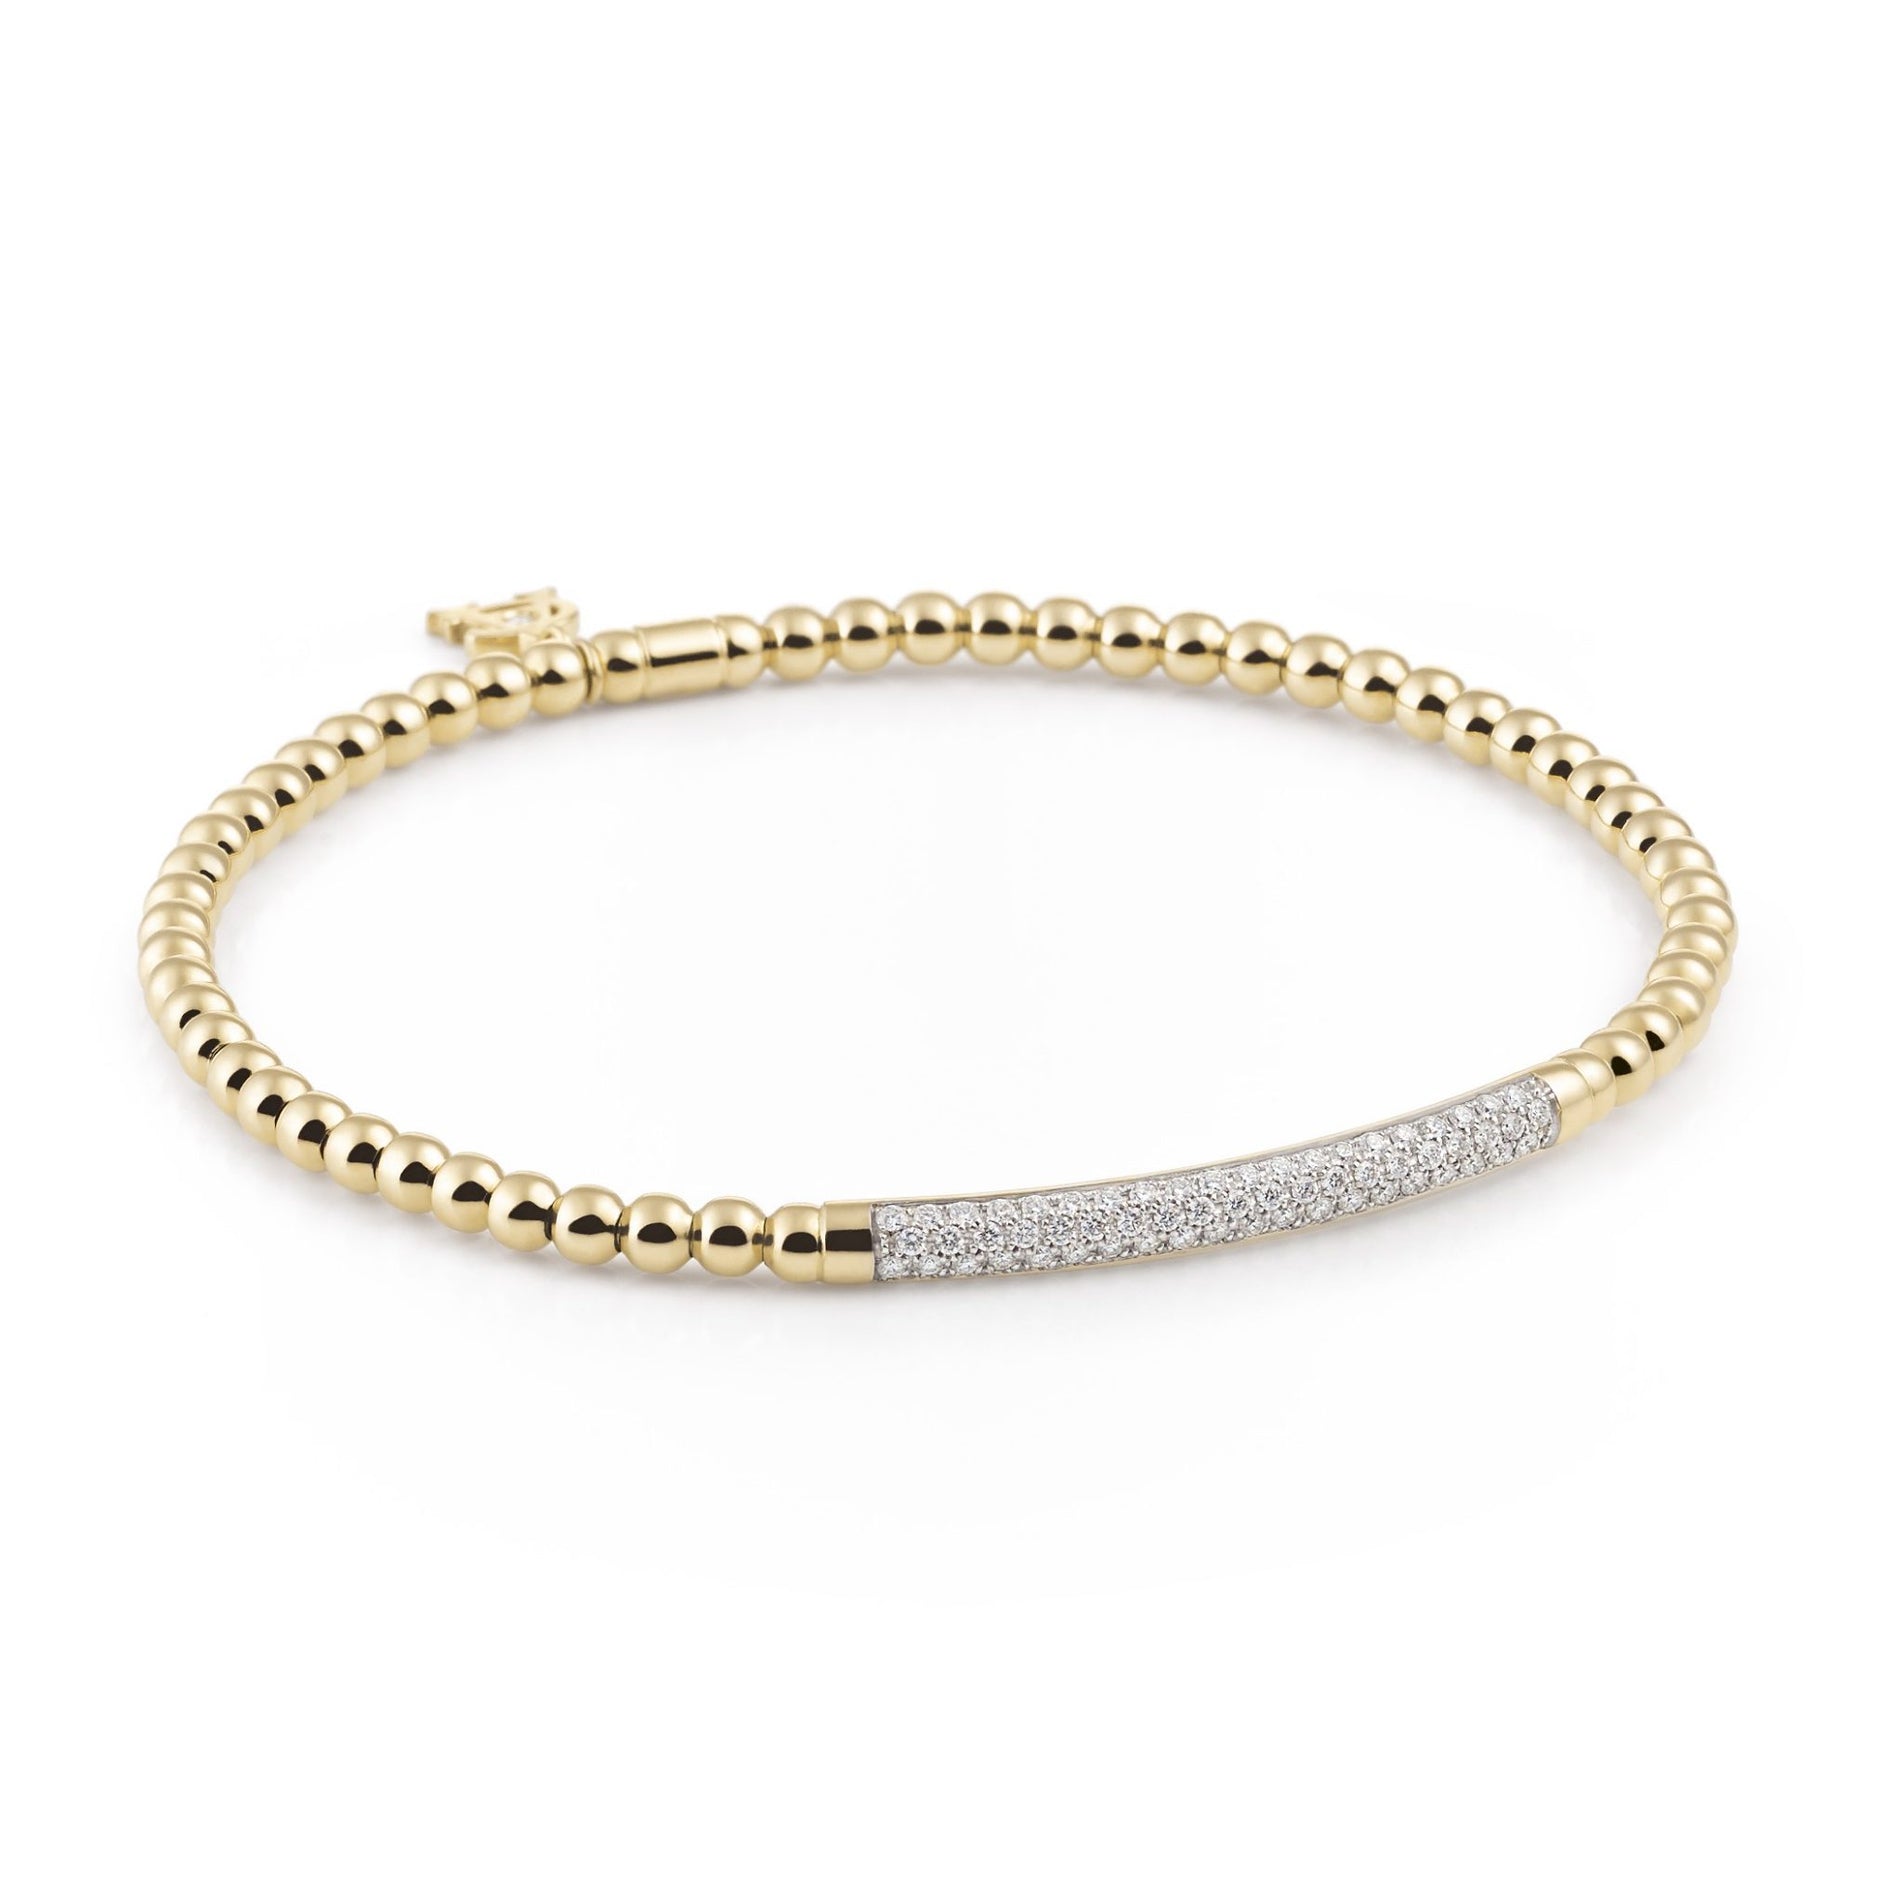 Al Coro Stretchy Bracelet in 18k Rose Gold with Pave Diamonds - Orsini Jewellers NZ